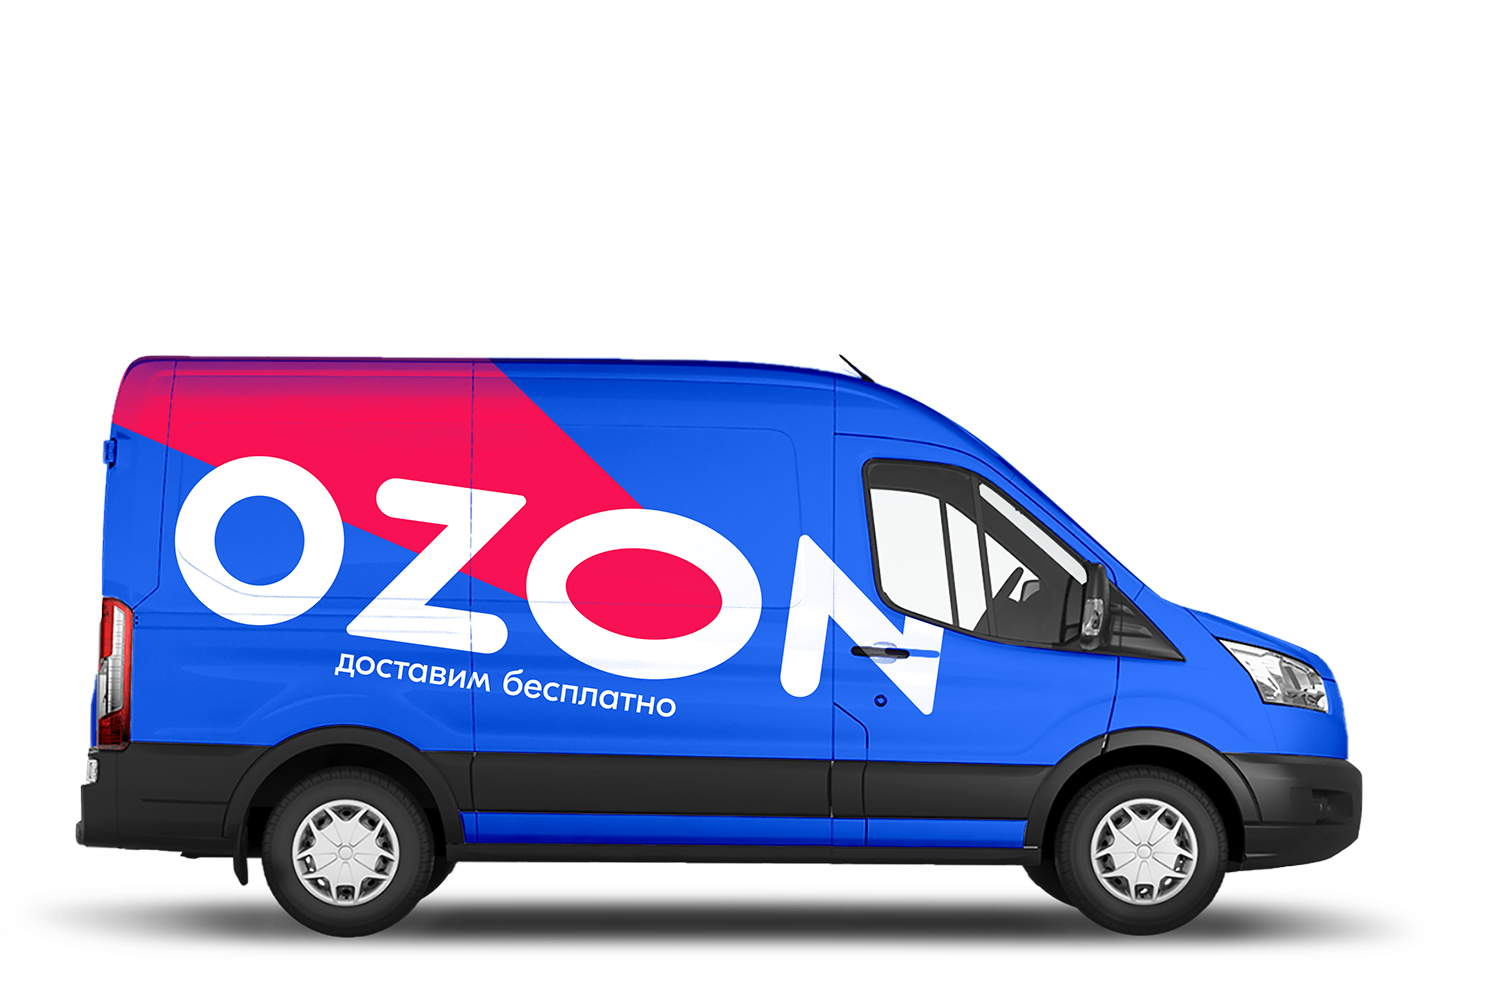 Заказать озон с бесплатной доставкой на дом. Фургон Озон. Машина Озон доставка. Форд Транзит Озон. Фирменный фургон.